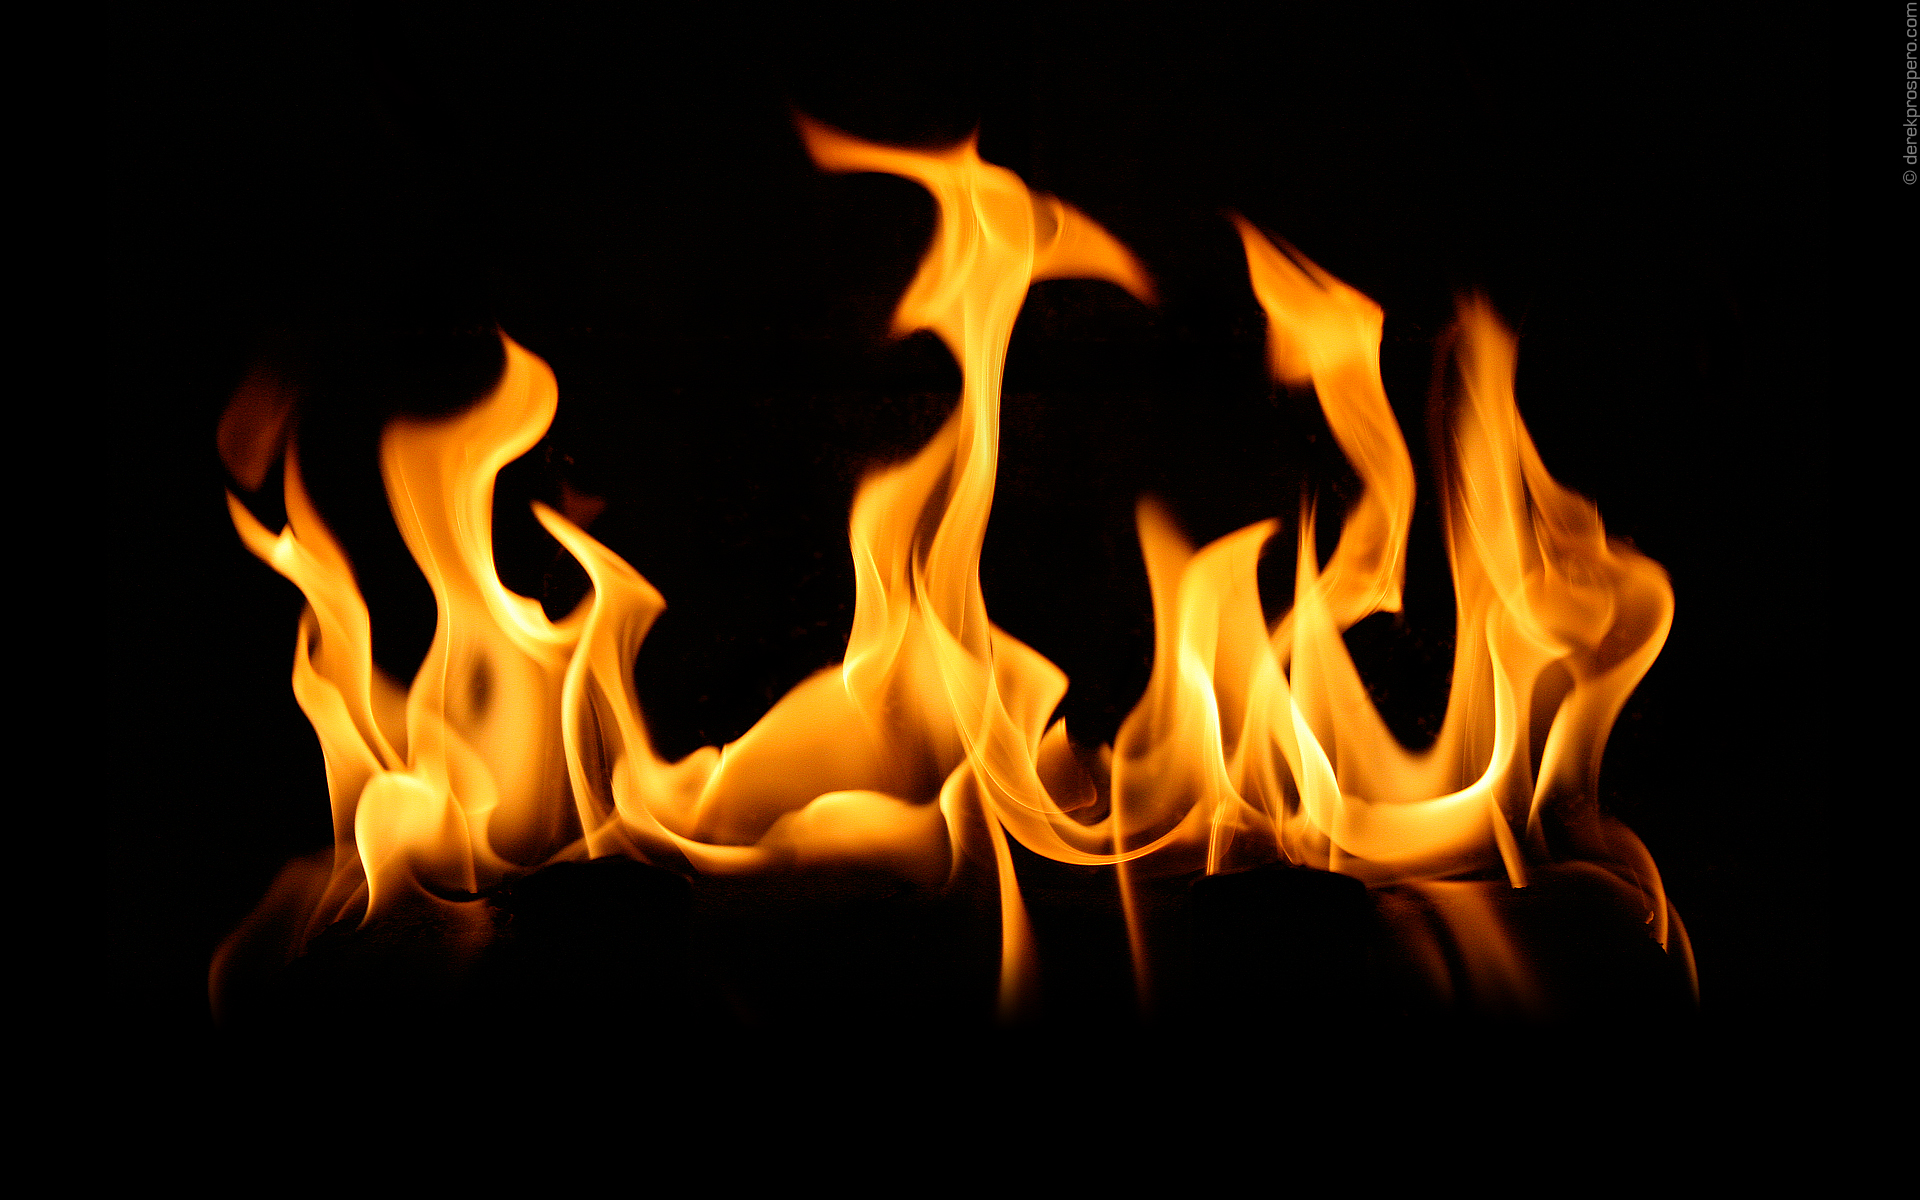 Dancing Flames: A high-definition desktop wallpaper showcasing vibrant flames.